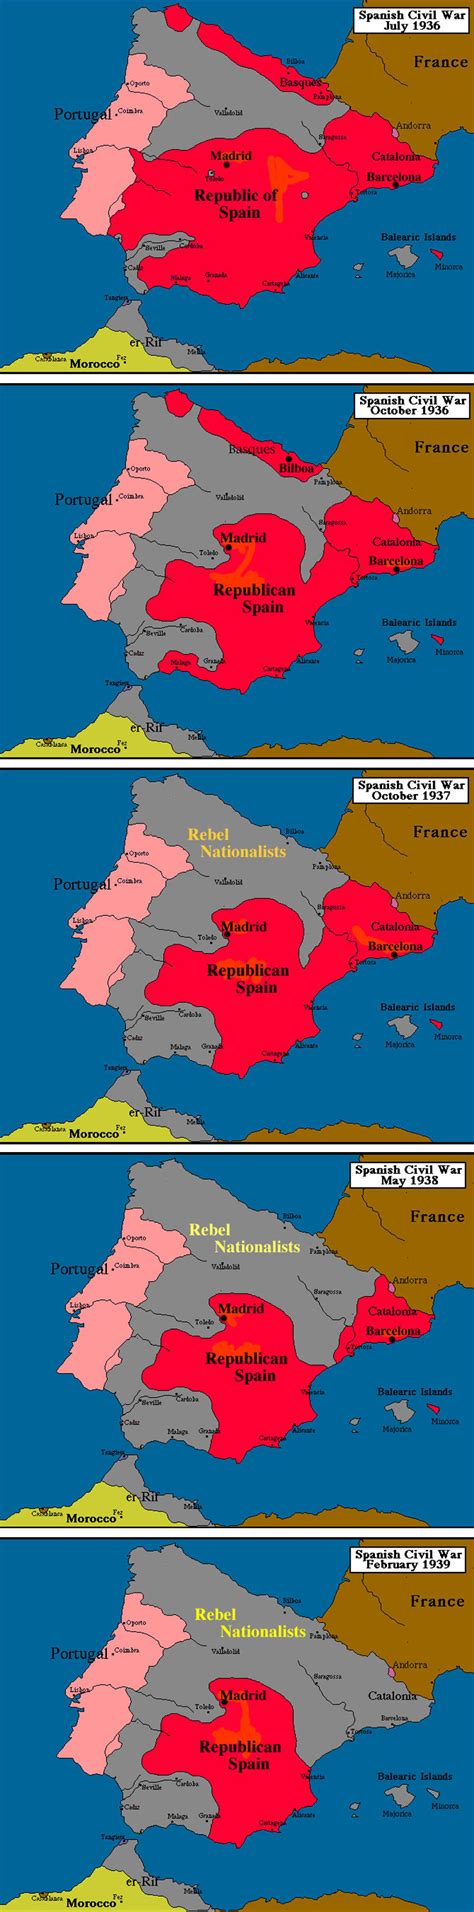 Spanish Civil War Maps 1936 1939 | Historical maps ...